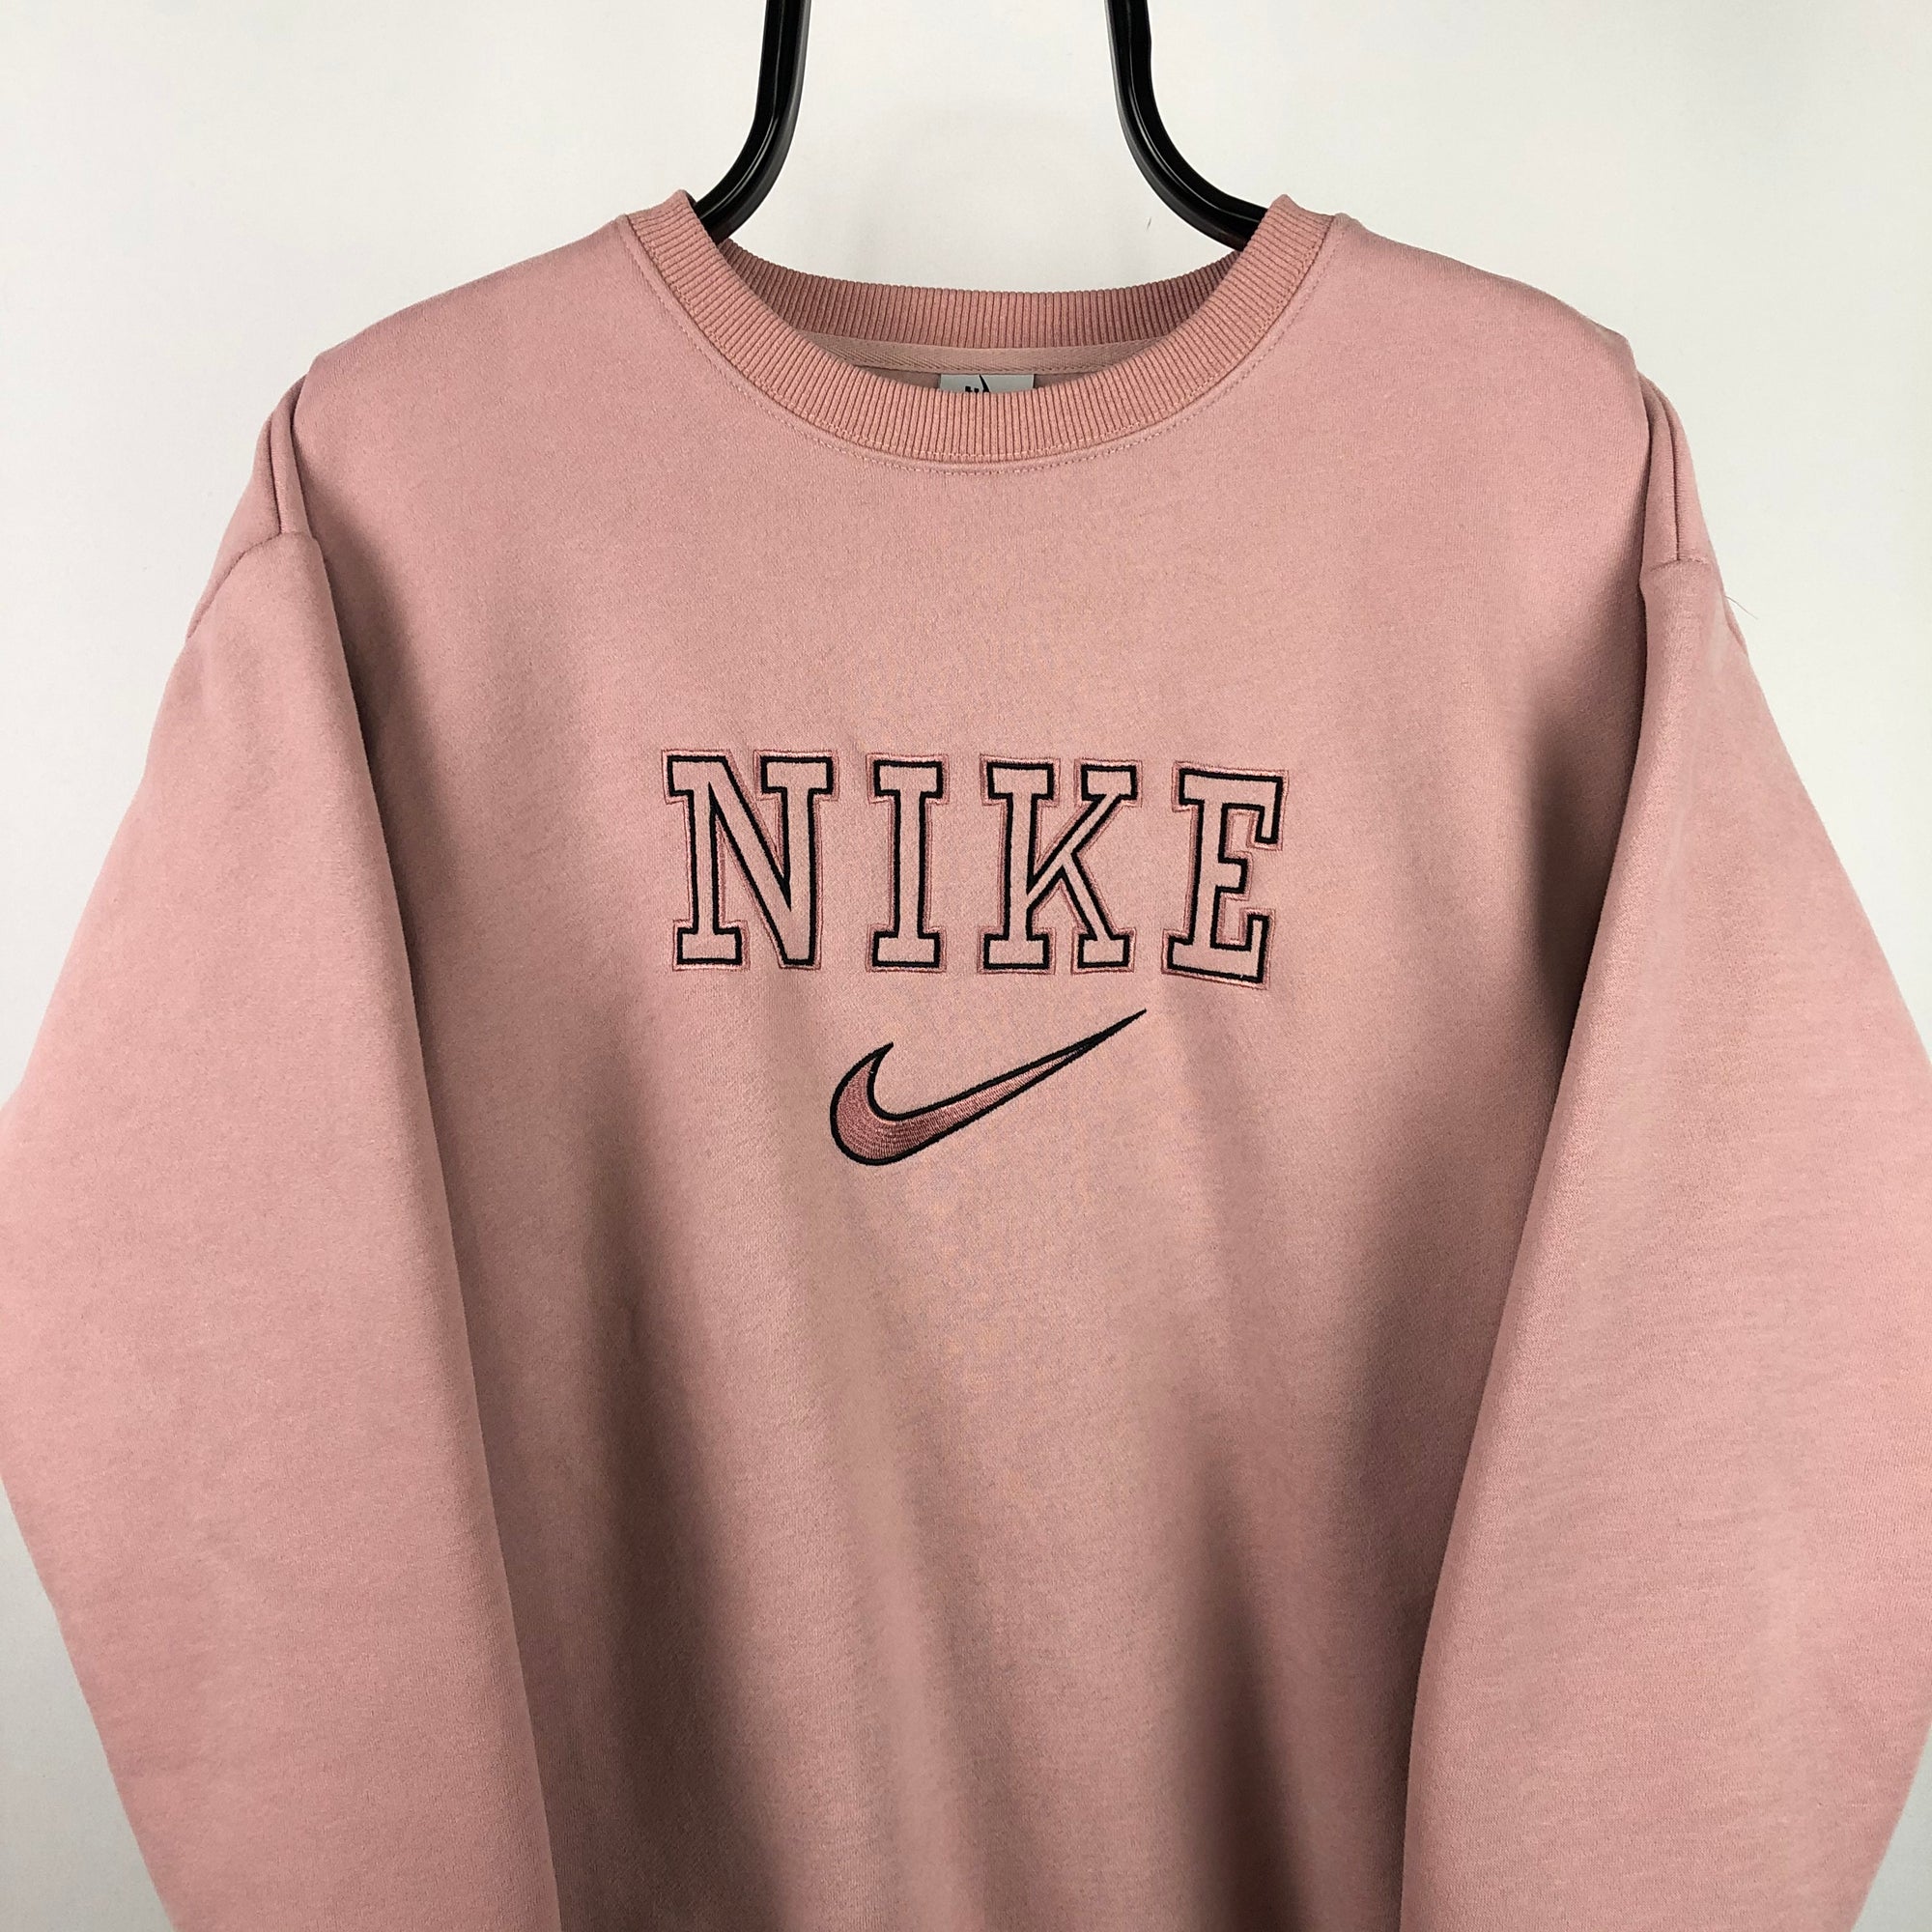 Nike Spellout Sweatshirt in Rose Pink - Men's Large/Women's XL